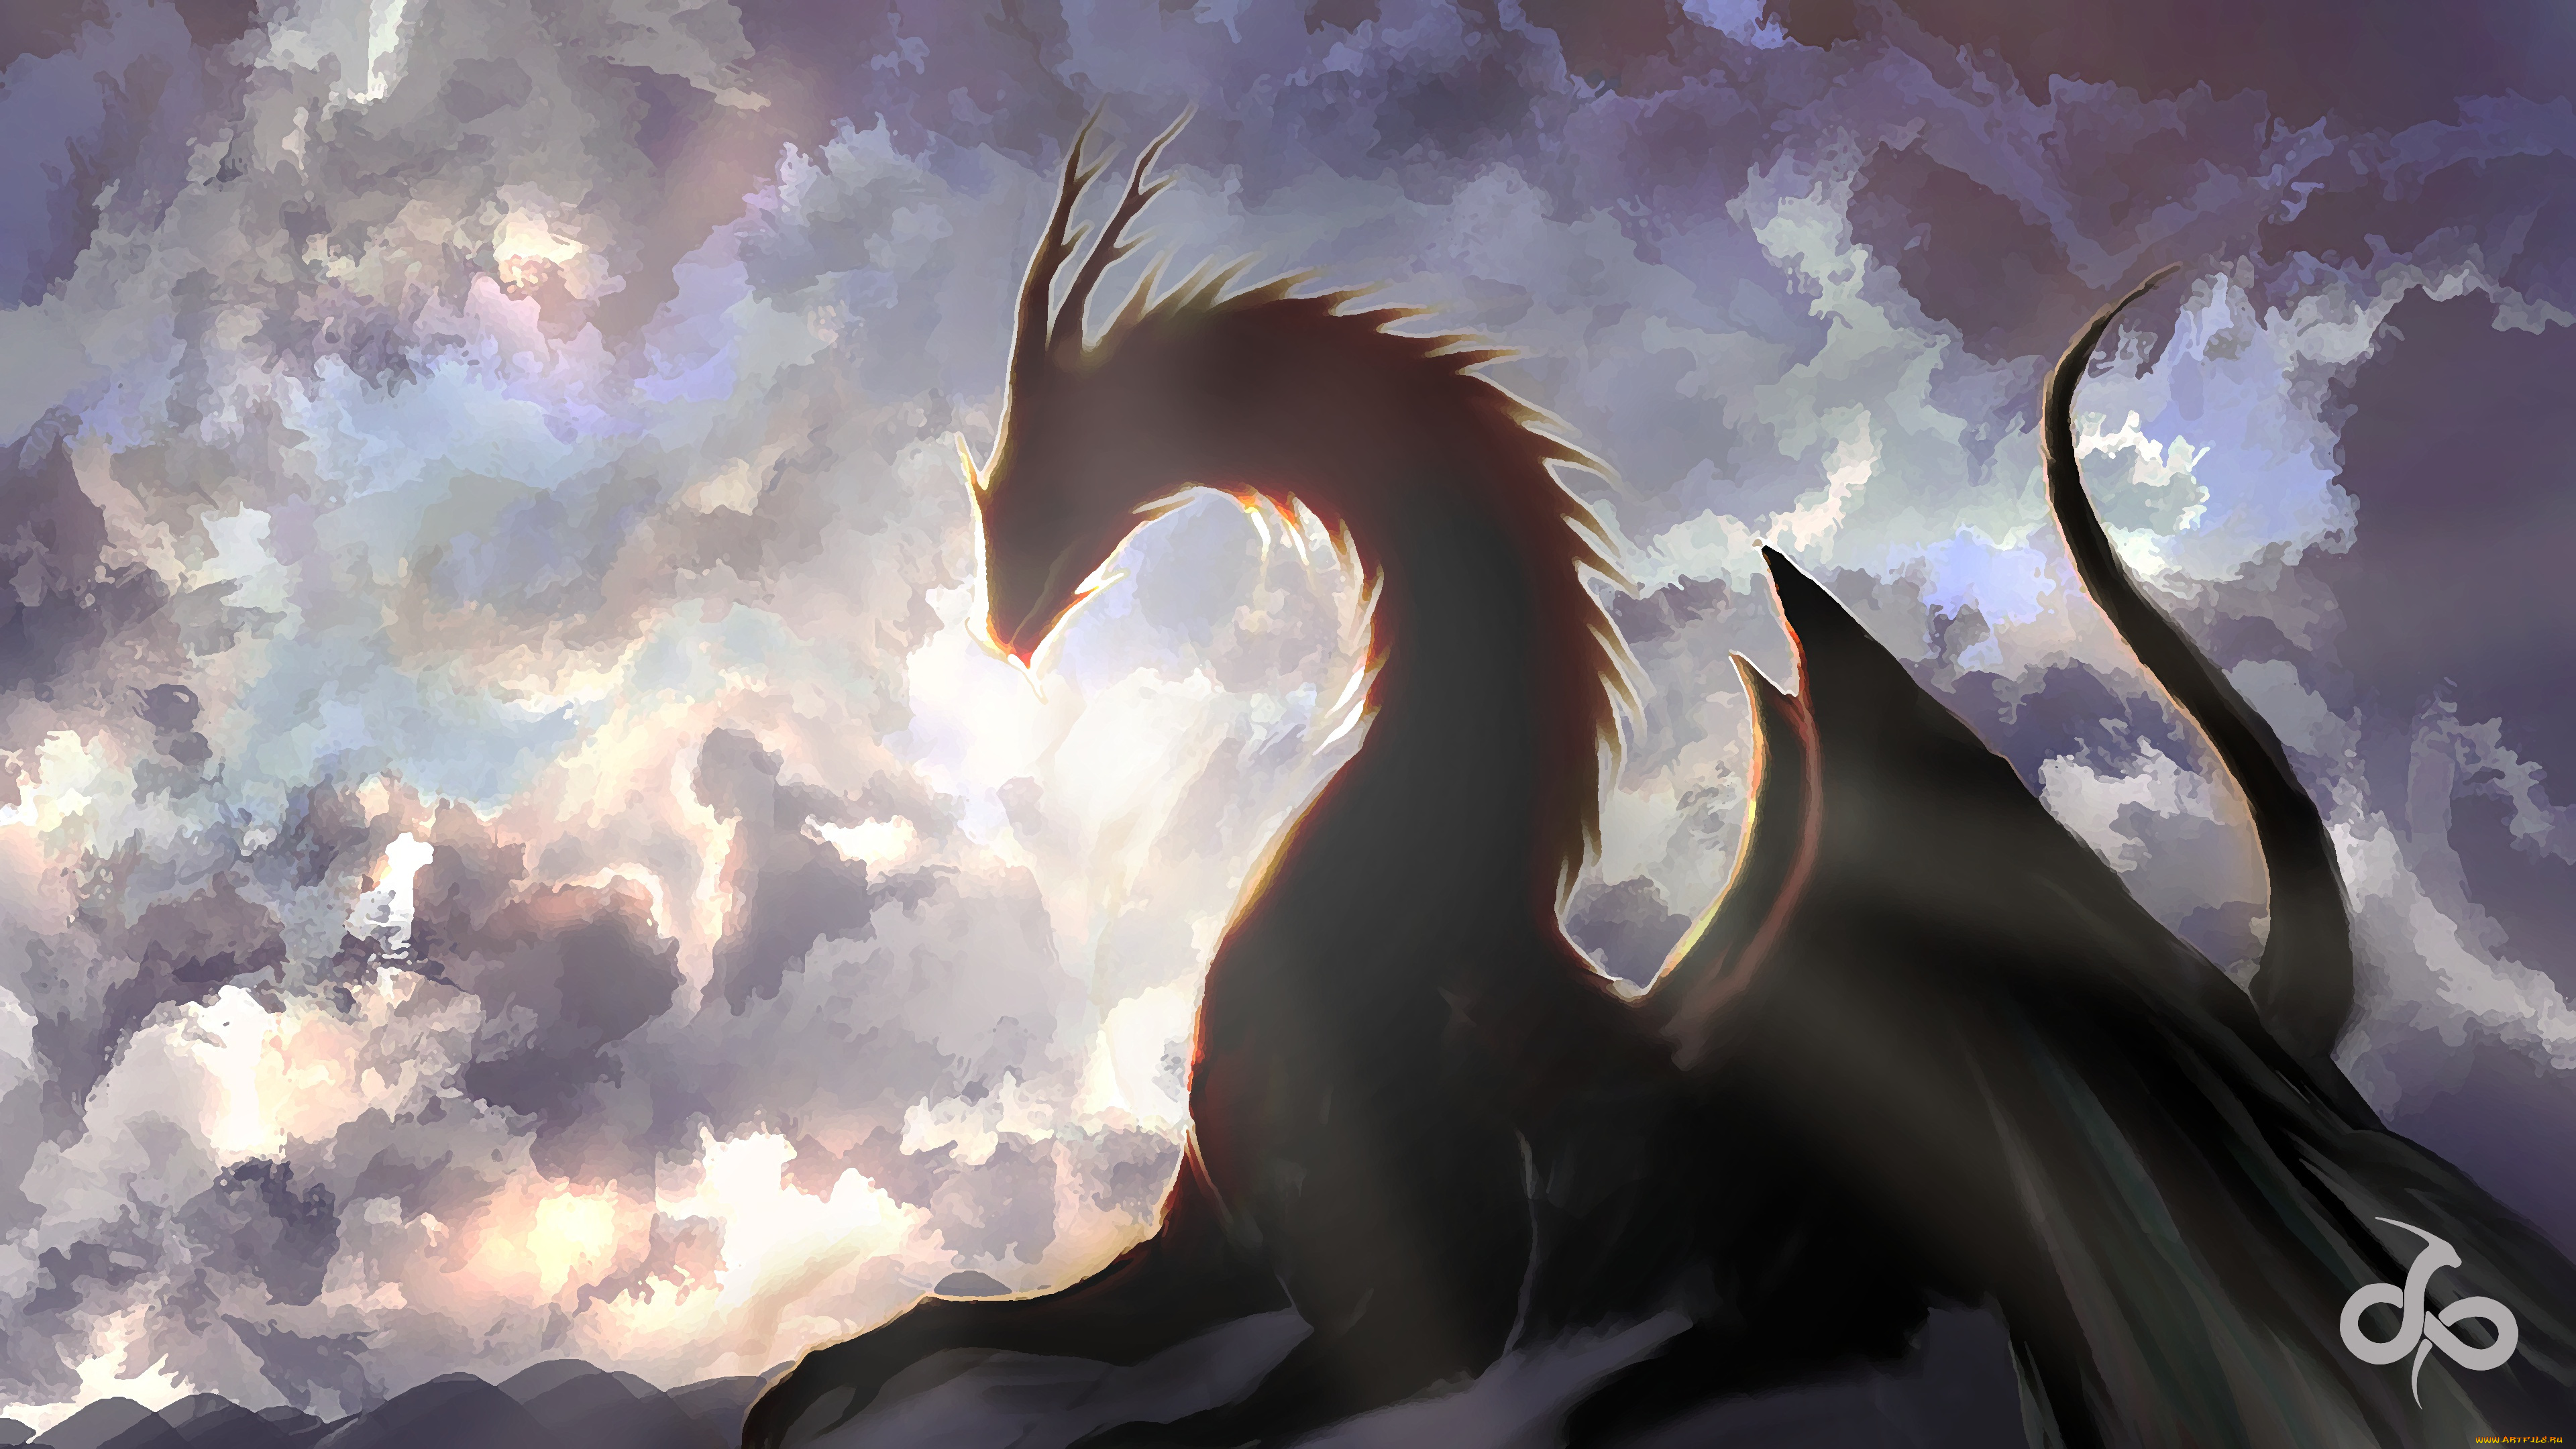 Картинка дракон обои. Вефрид дракон. Инлун дракон. Имуги мифология. Красивый дракон.